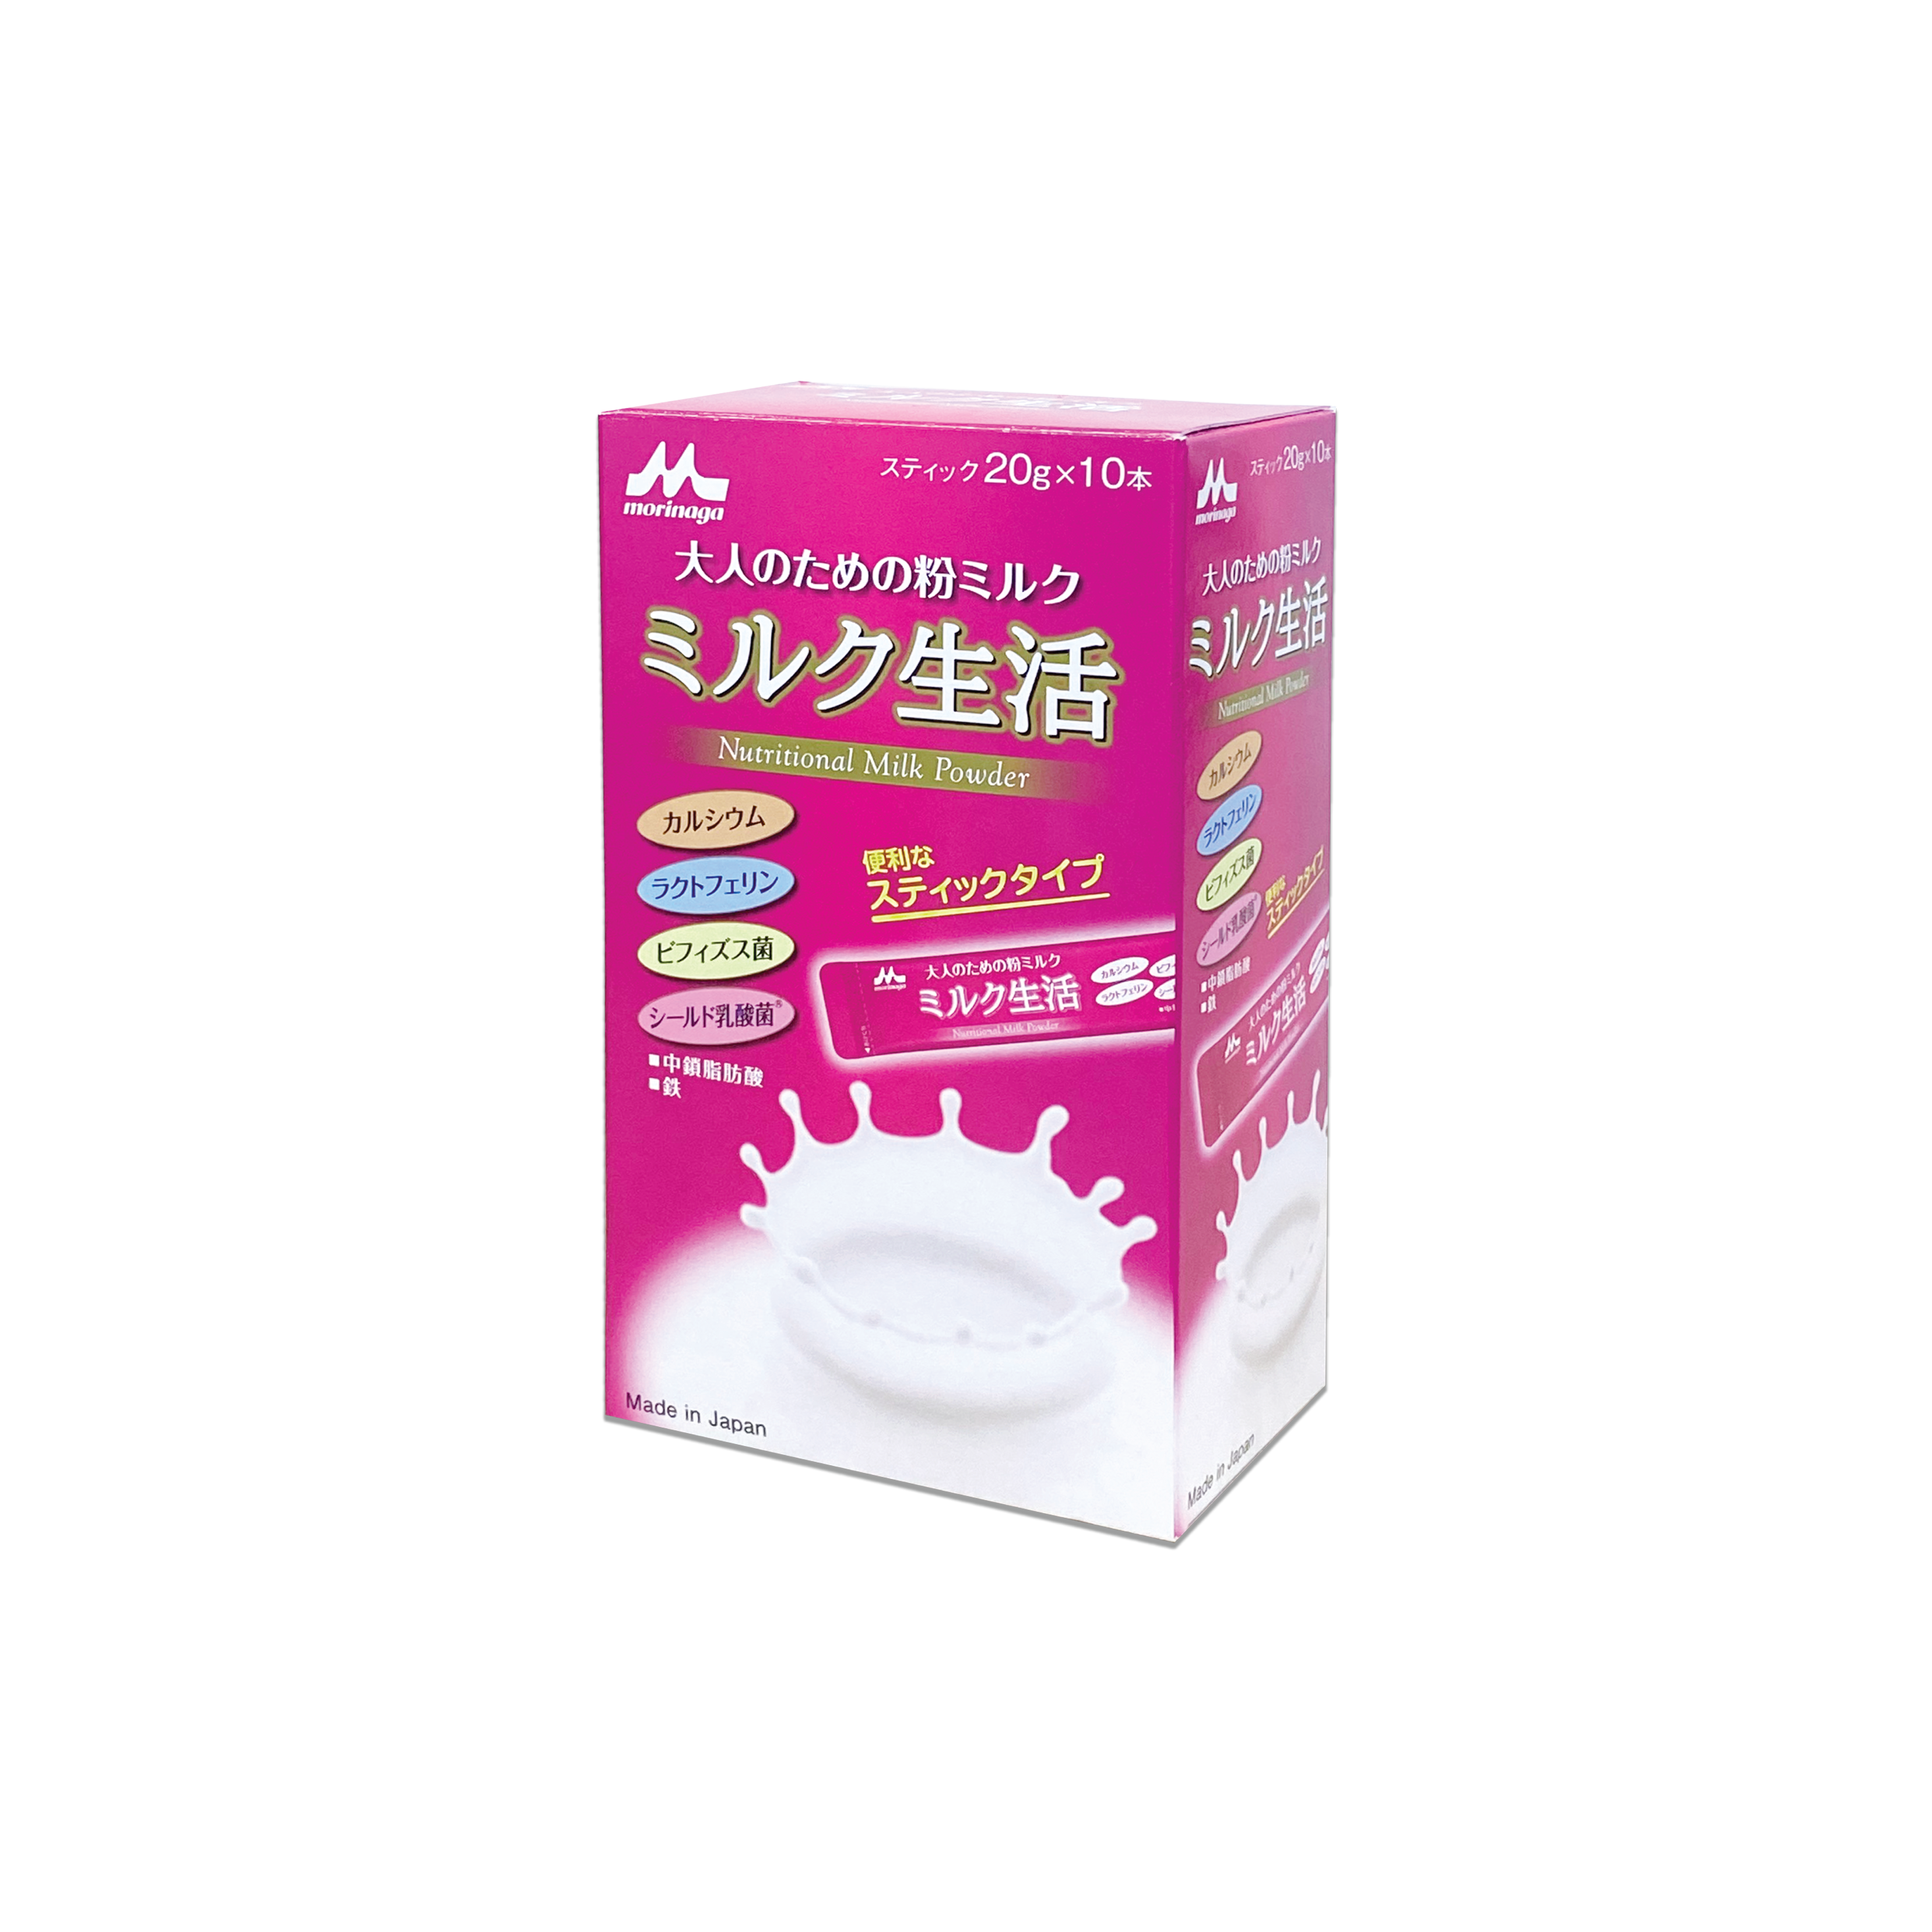 MORINAGA NUTRITIONAL MILK POWDER – Imported from Japan – 200g (20g x 10 stick packs)